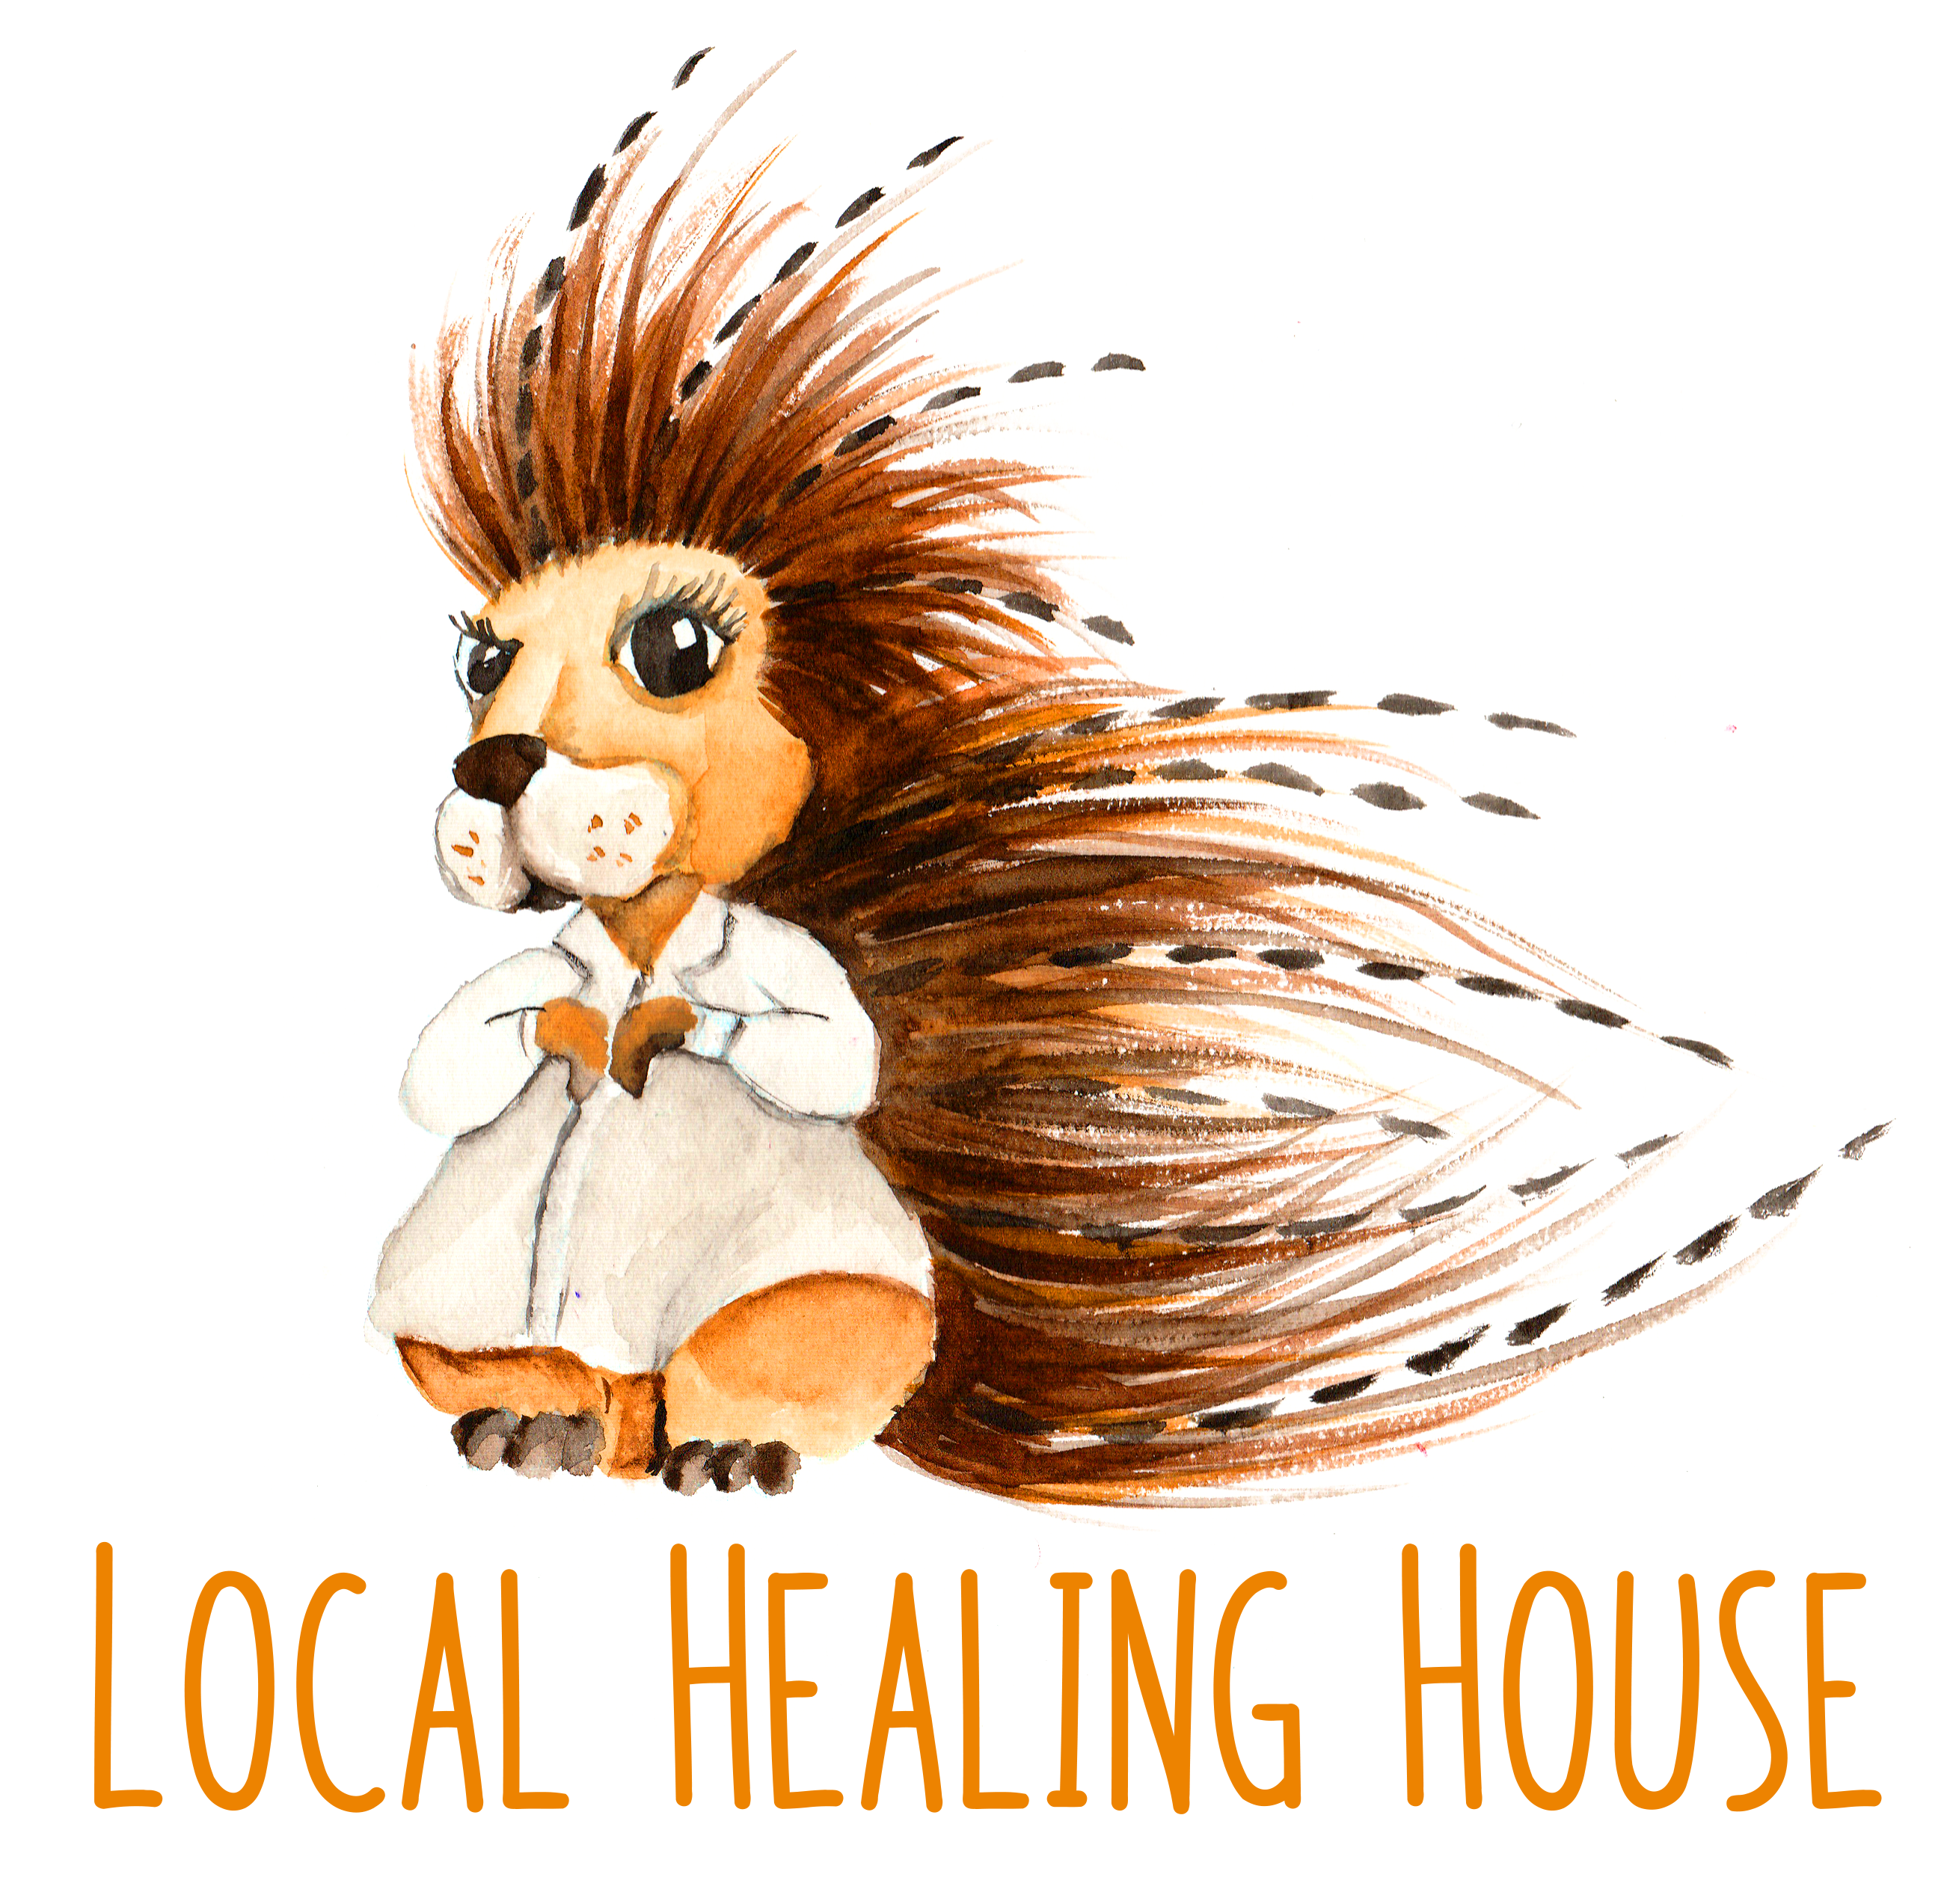 The Local Healing House, LLC